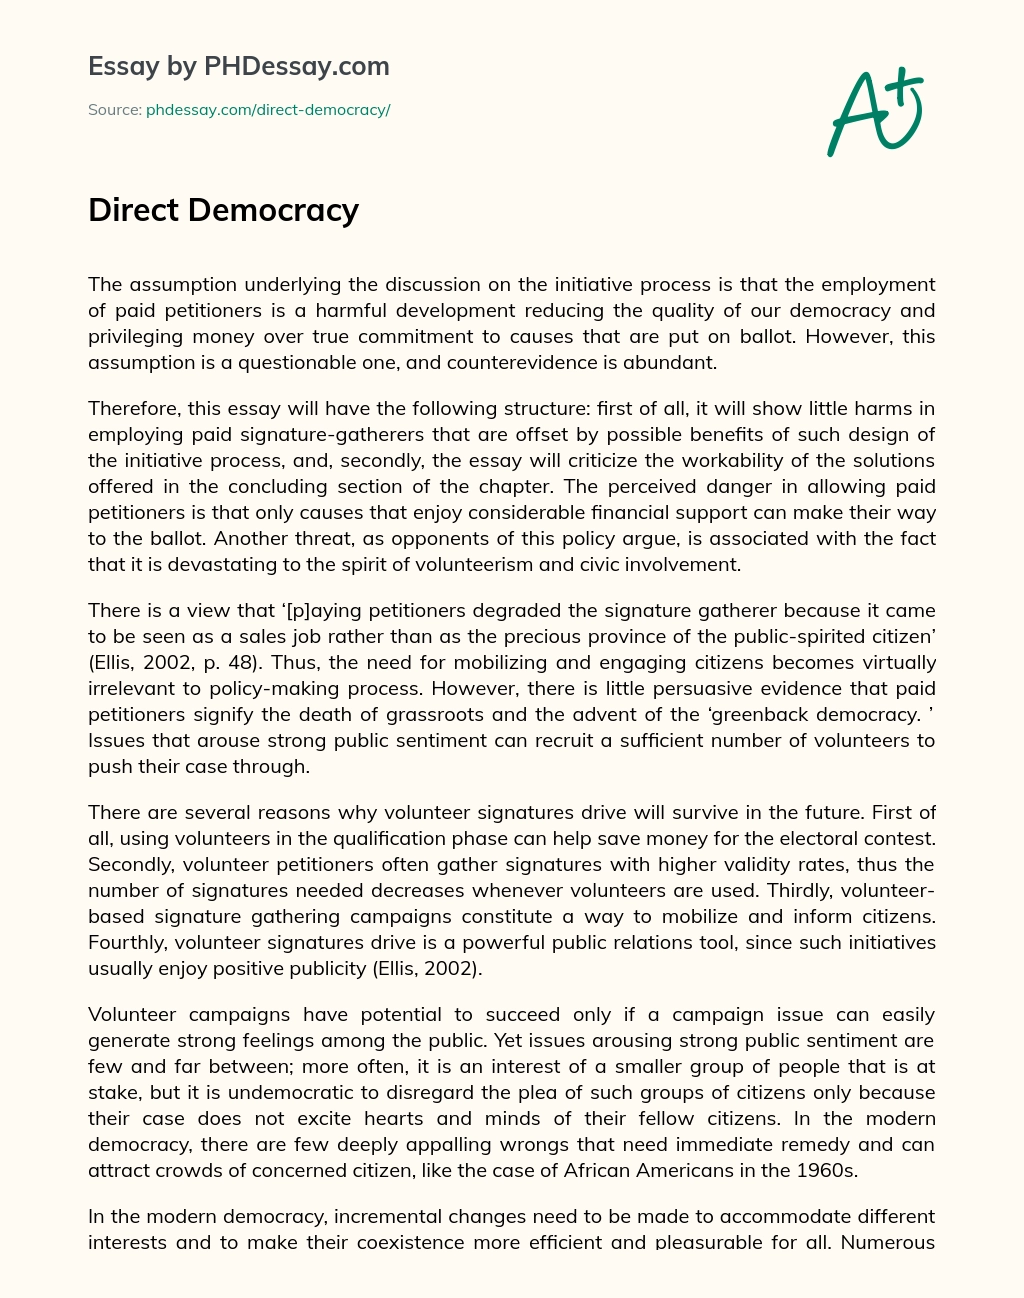 Direct Democracy essay